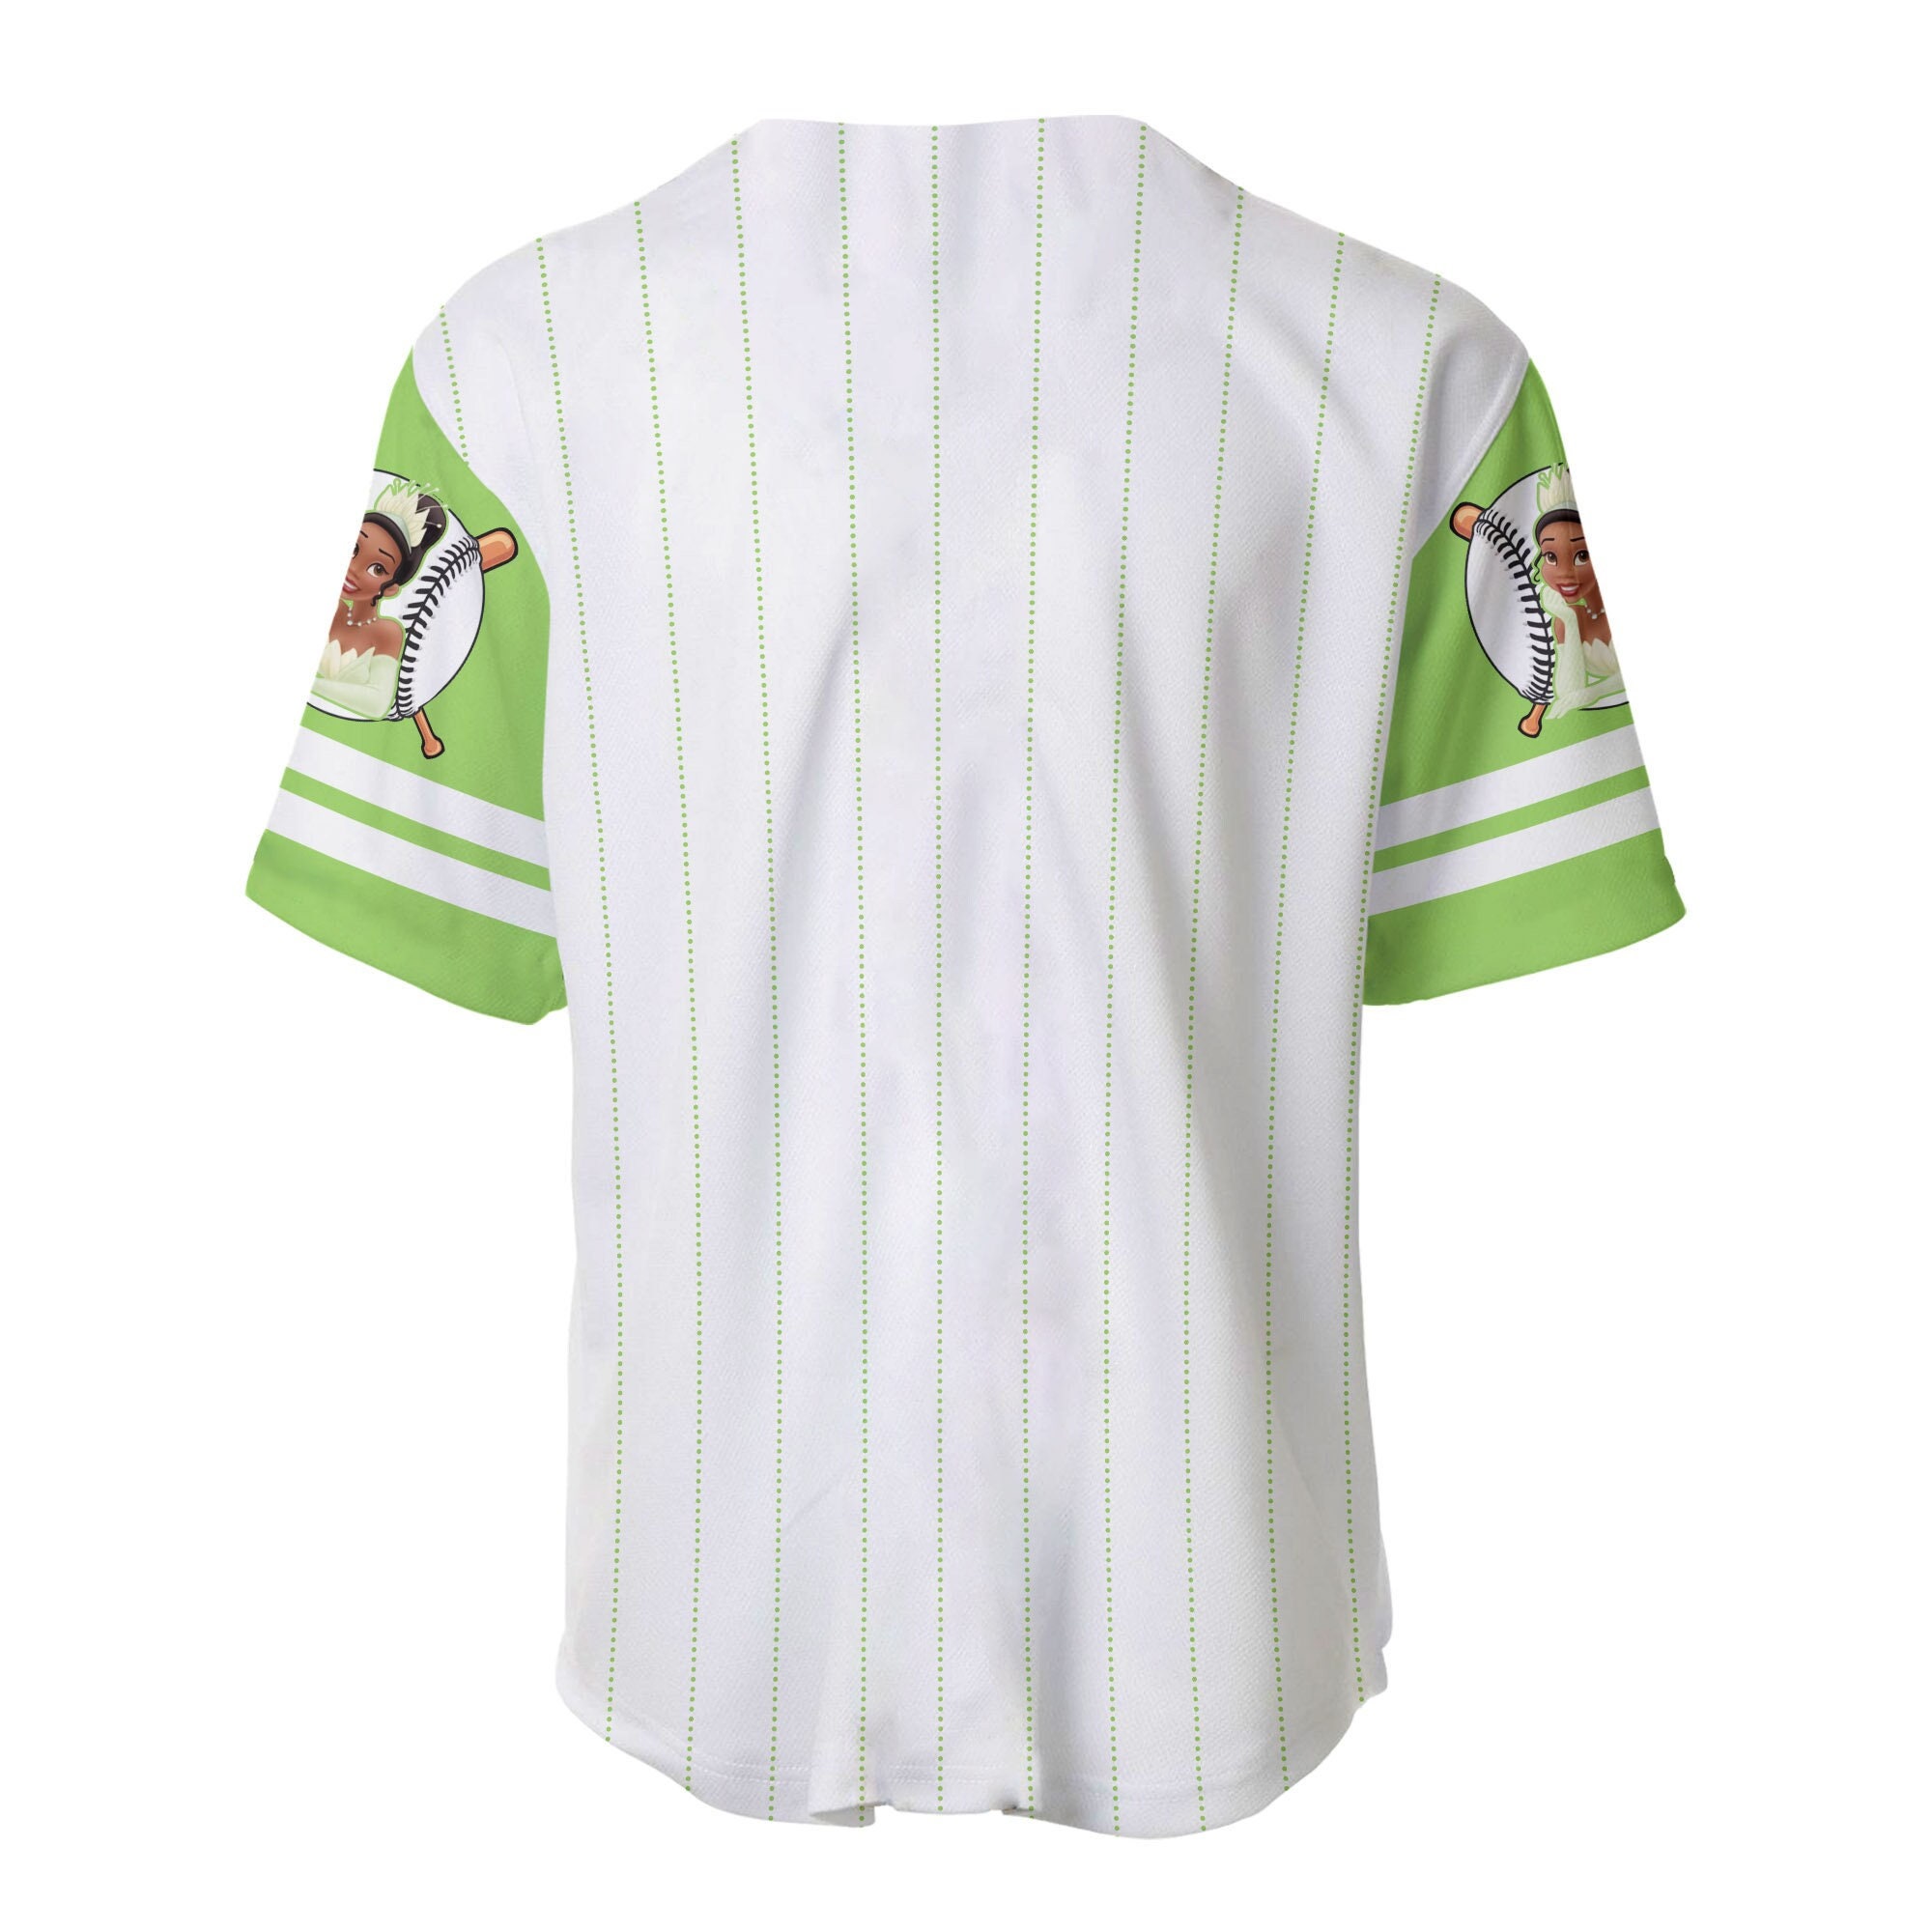 Tiana Princess White Lime Green | Disney Custom Baseball Jersey